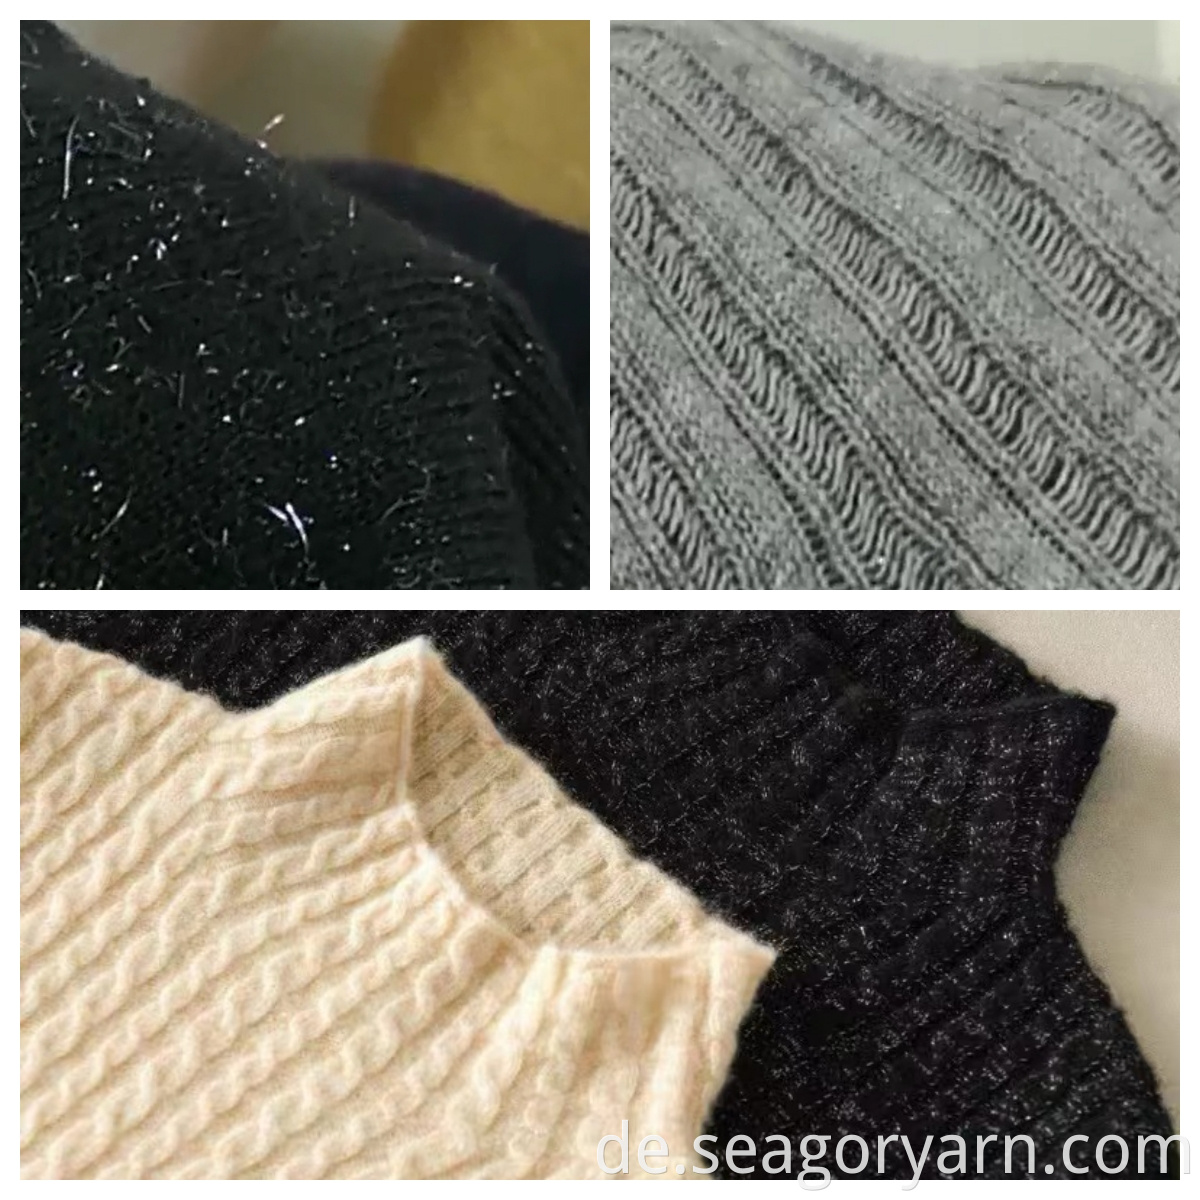 Metal Yarn For Weaving And Knitting